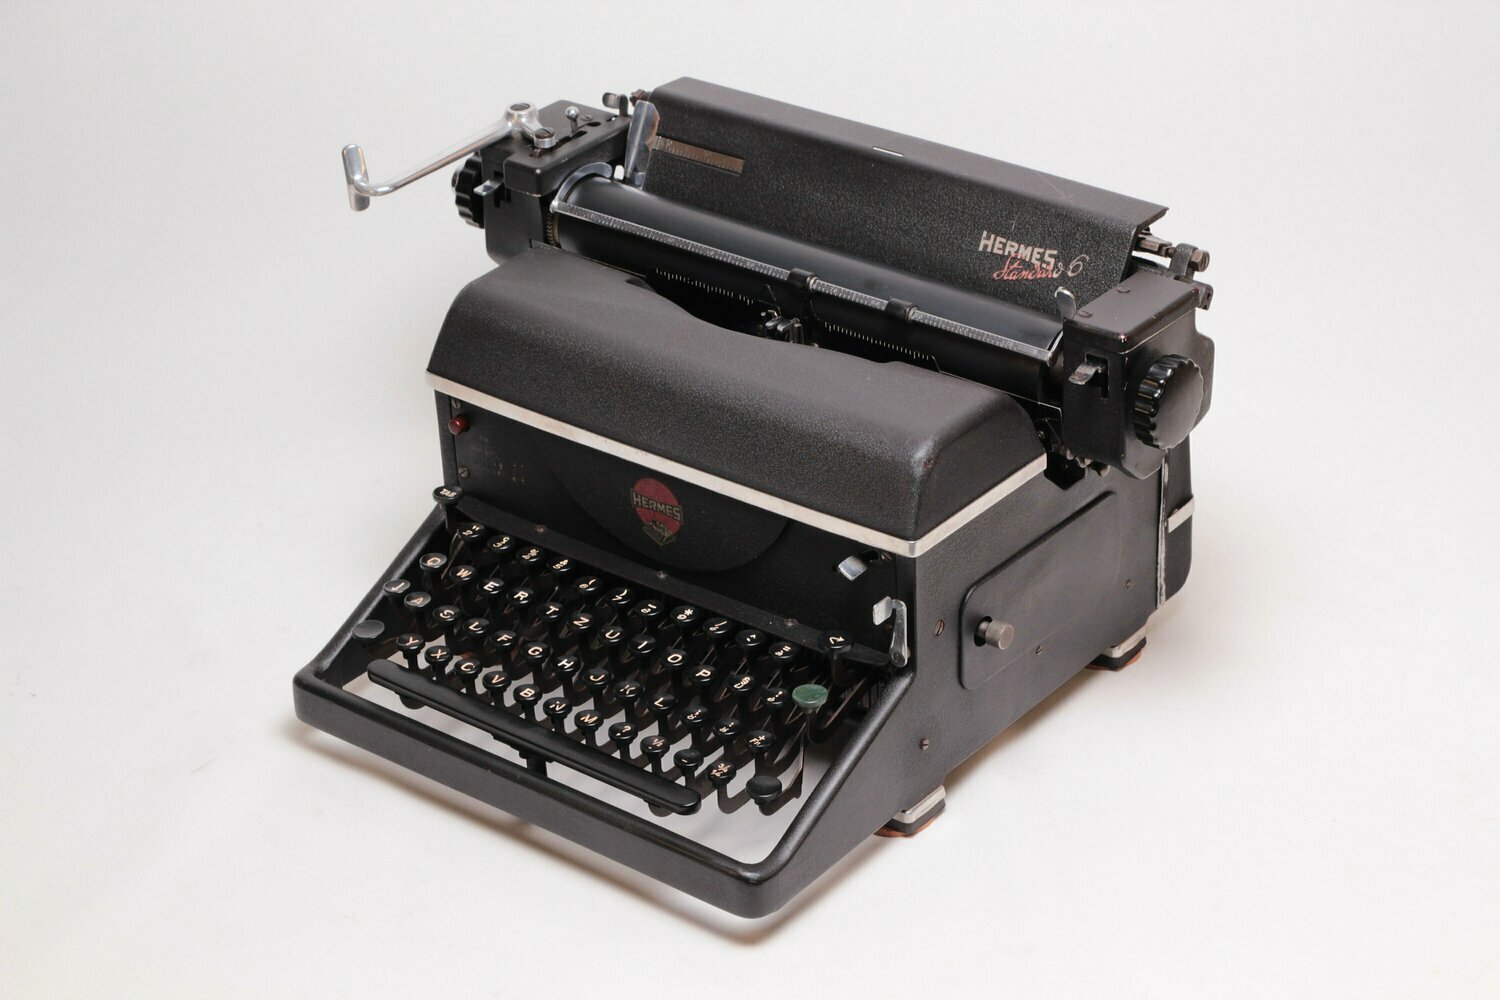 Hermes Standard 6 Black Typewriter